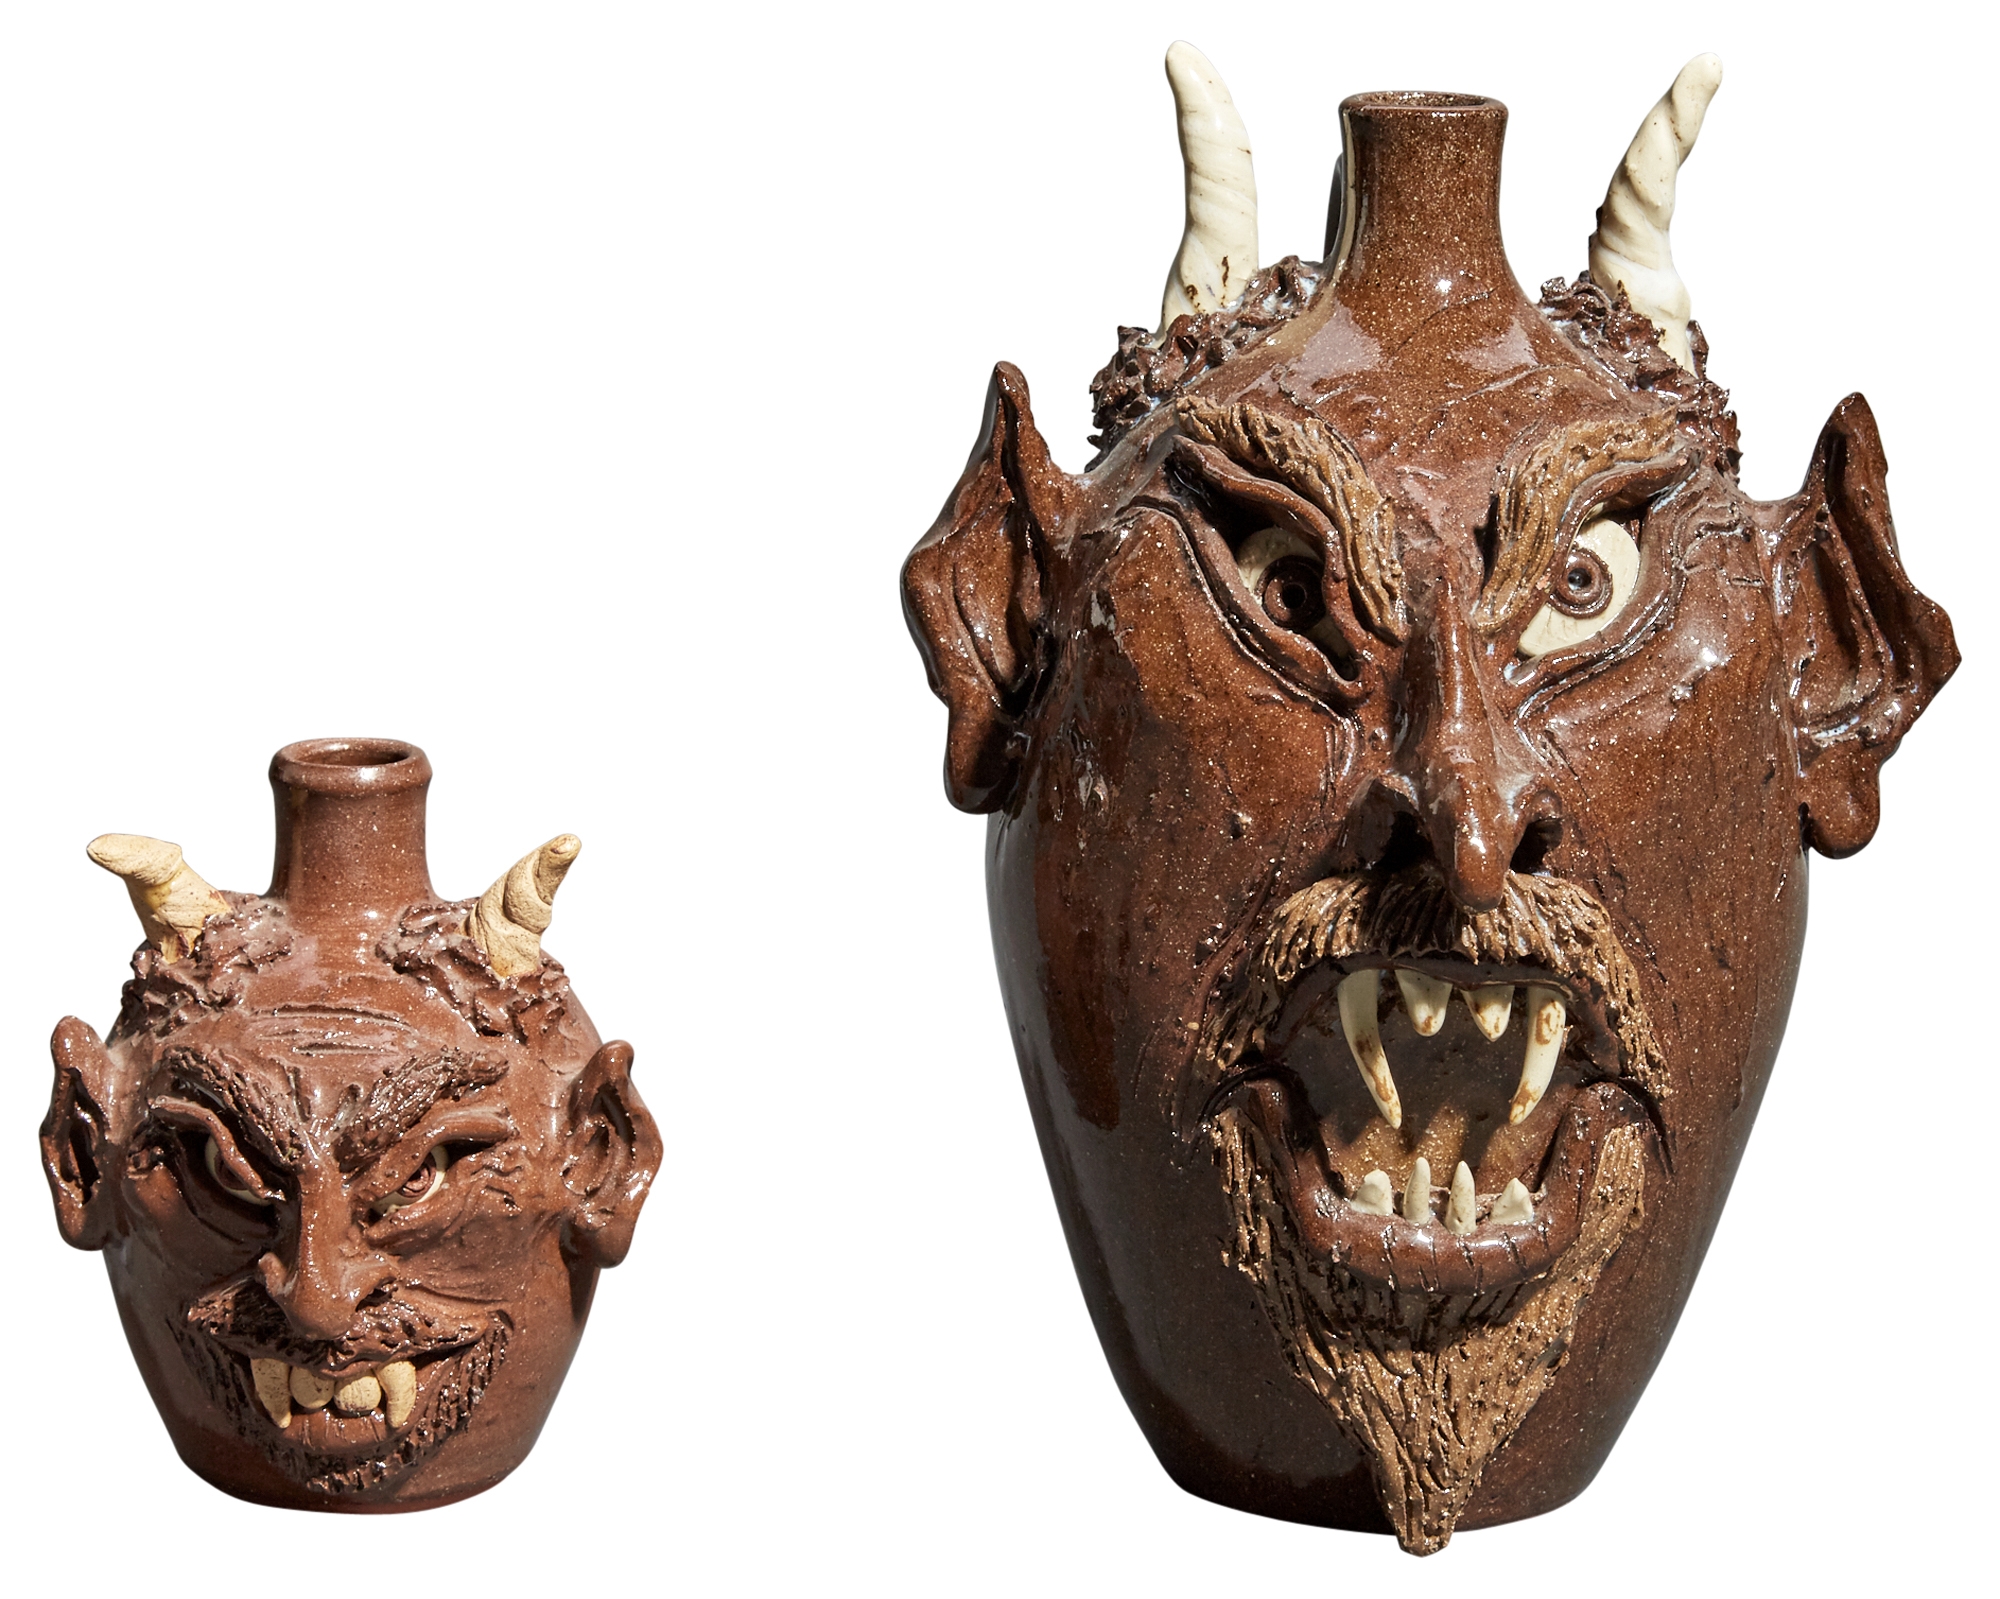 Artwork by Sandy Cole, Devil Jug, Made of Ceramic